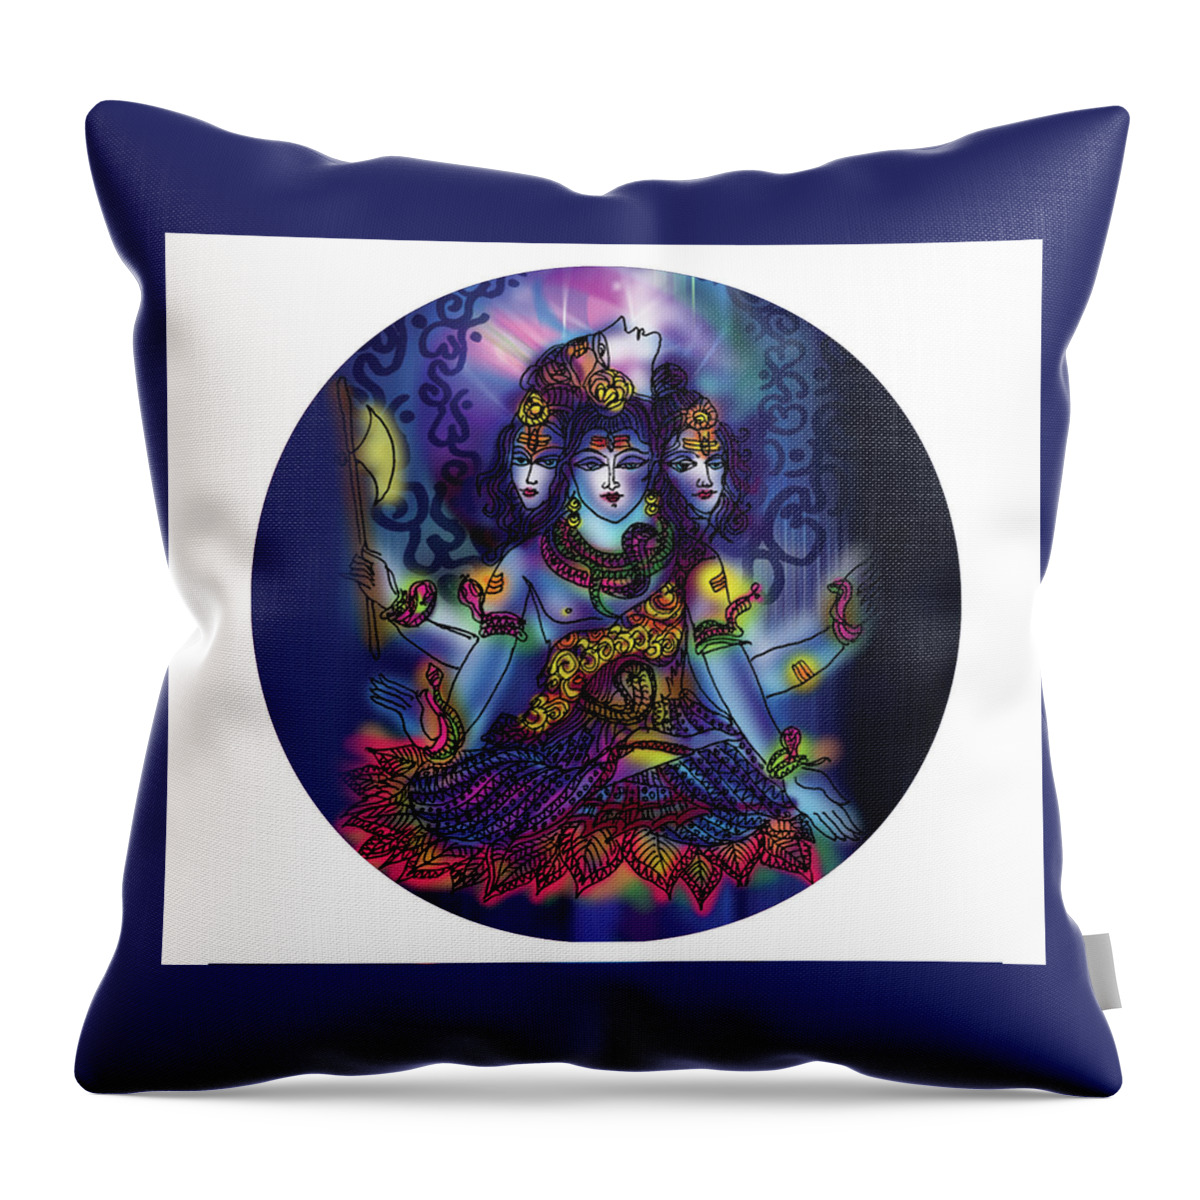 Shiva Throw Pillow featuring the painting Enlightened Shiva by Guruji Aruneshvar Paris Art Curator Katrin Suter